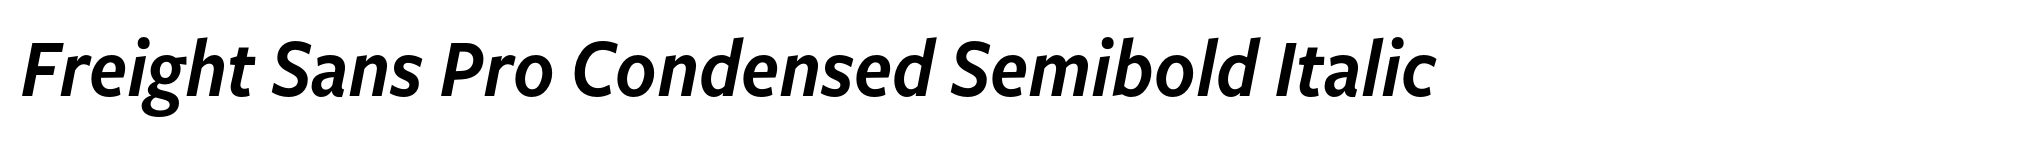 Freight Sans Pro Condensed Semibold Italic image